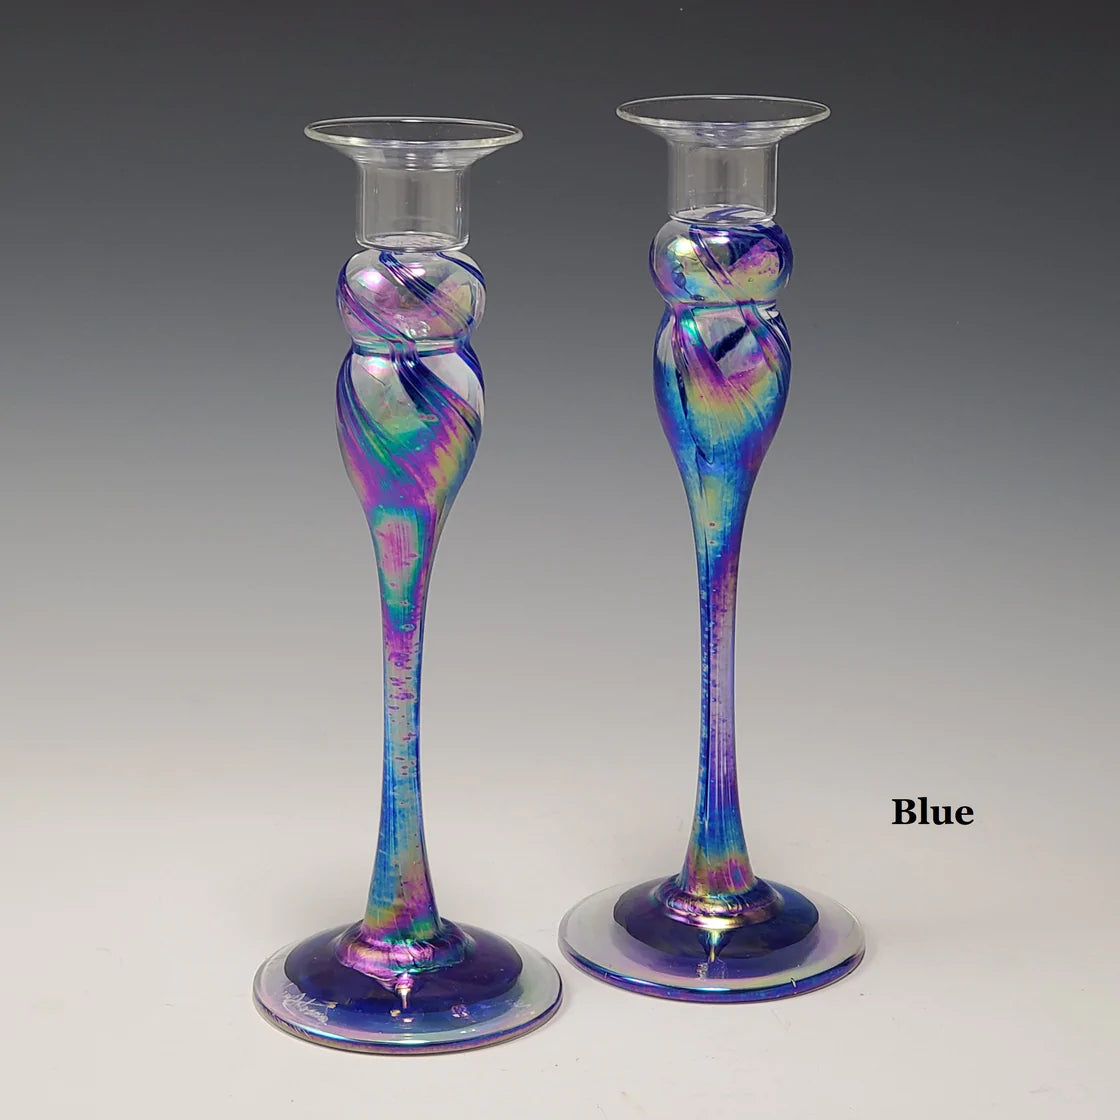 Rosetree Glassware- Blue Candlestick Holders